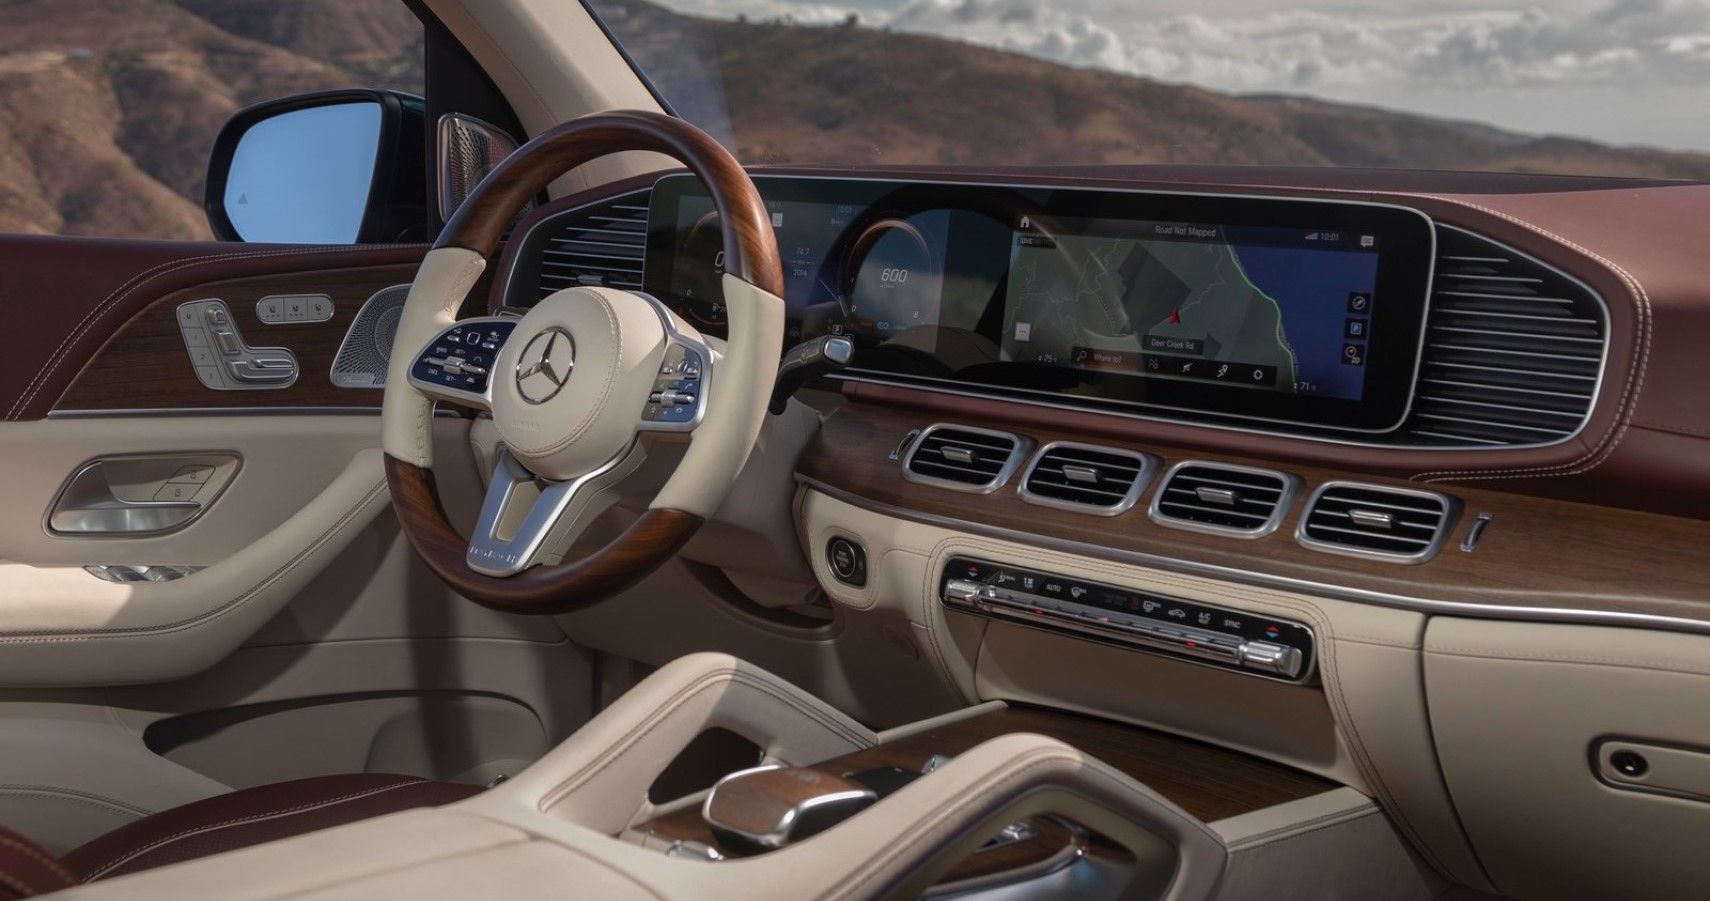 Mercedes-Maybach GLS interior dashboard layout view